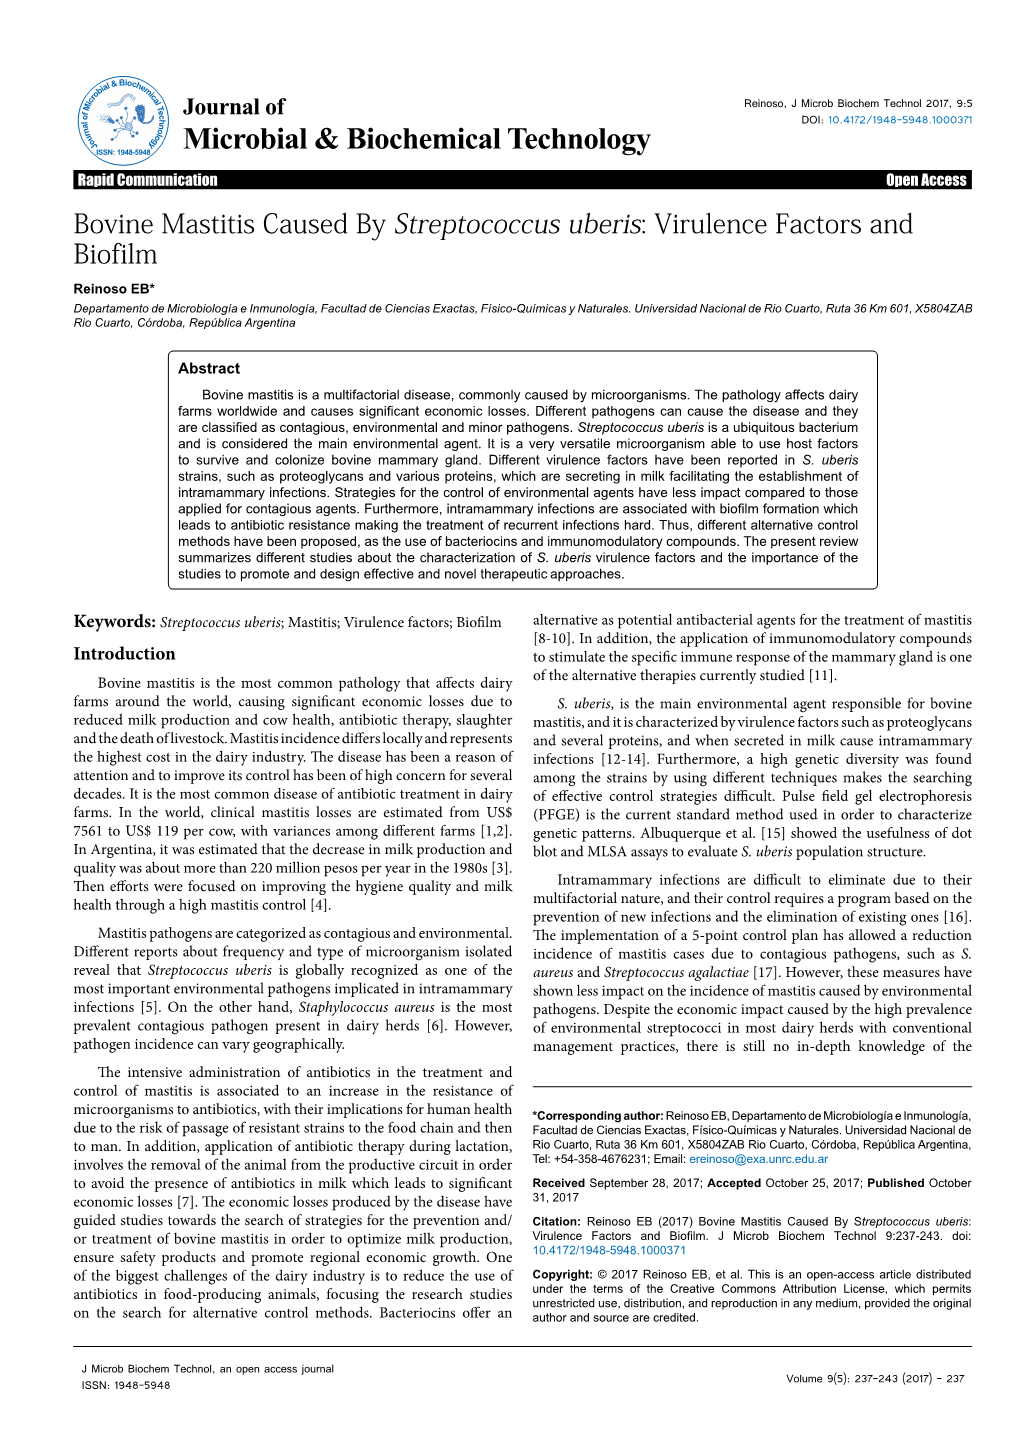 Bovine Mastitis Caused by Streptococcus Uberis: Virulence Factors and Biofilm